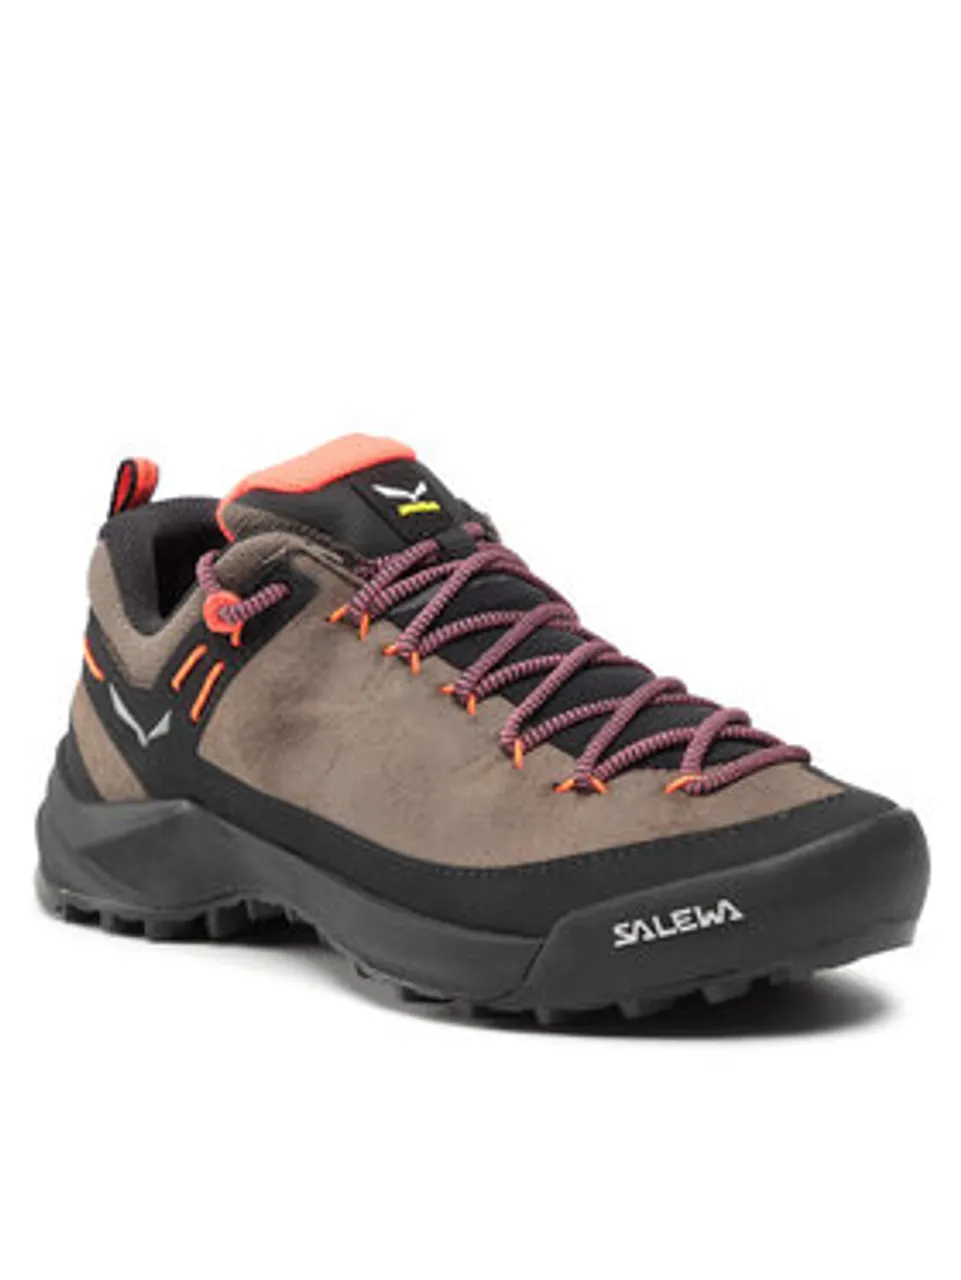 Salewa Trekkingschuhe Ws Wildfire Leather 61396-7953 Braun